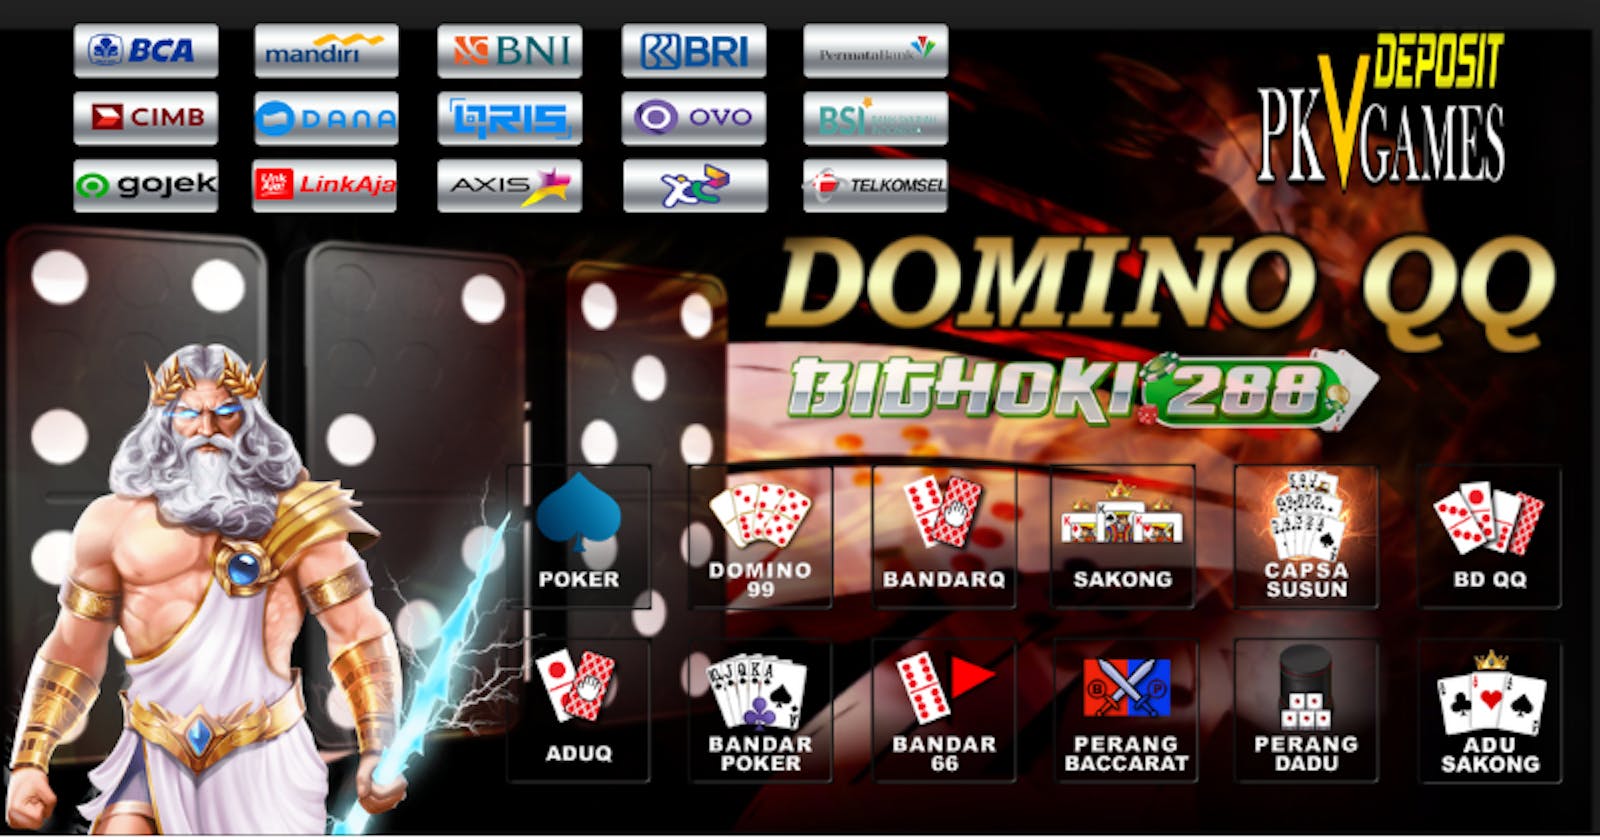 DominoQQ Pkv, DominoQQ Online Uang Asli Terpopuler Di Indonesia